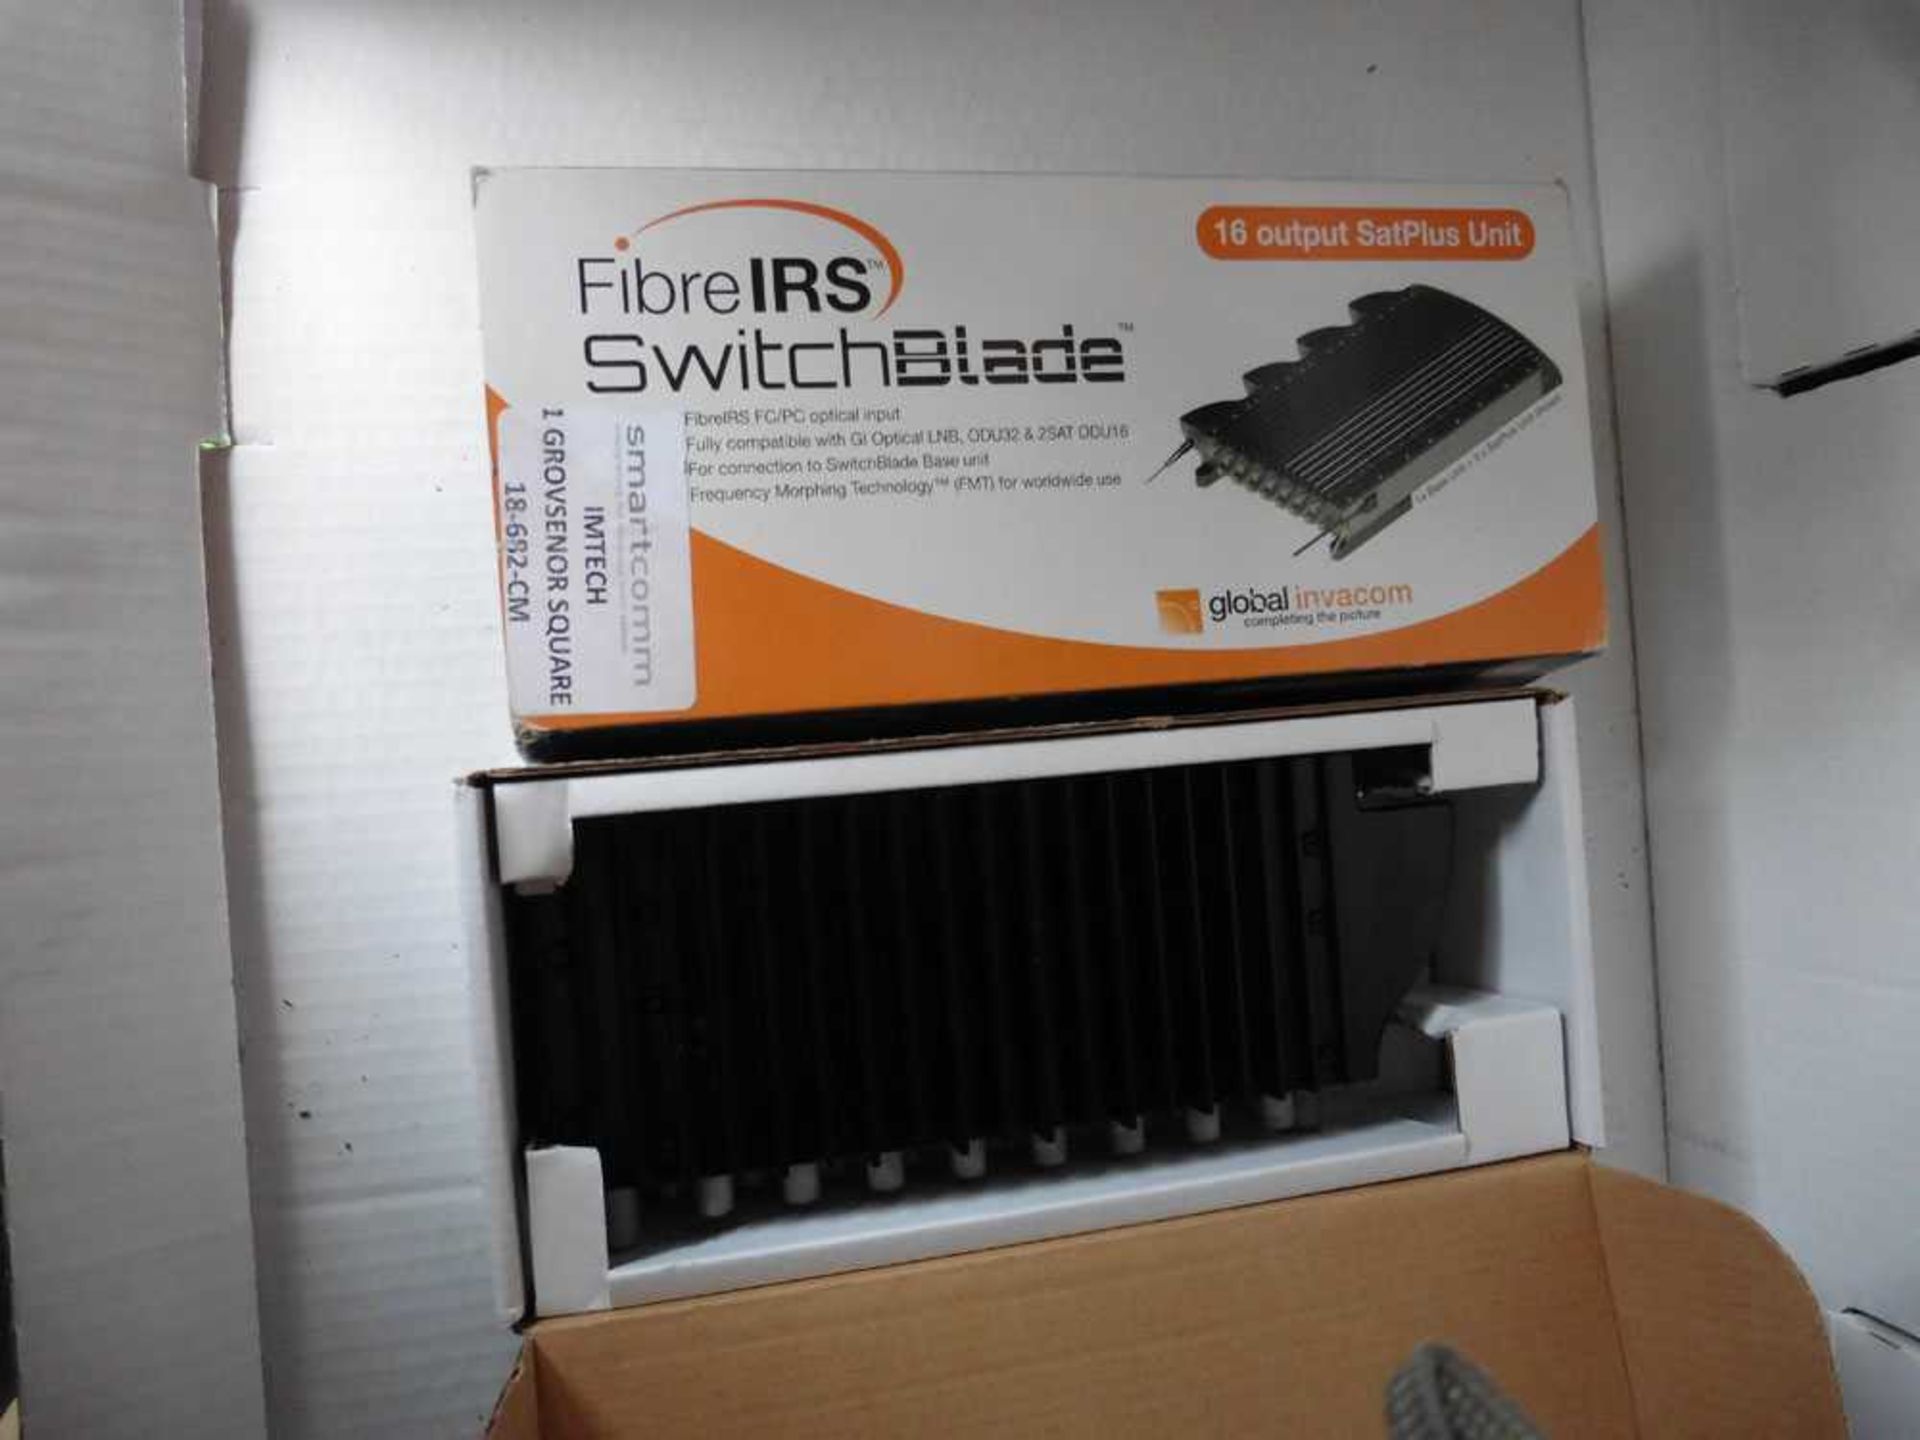 +VAT 2 x Global Invacom fibre IRS switch blade 8 output Sat Plus unit - Image 3 of 4